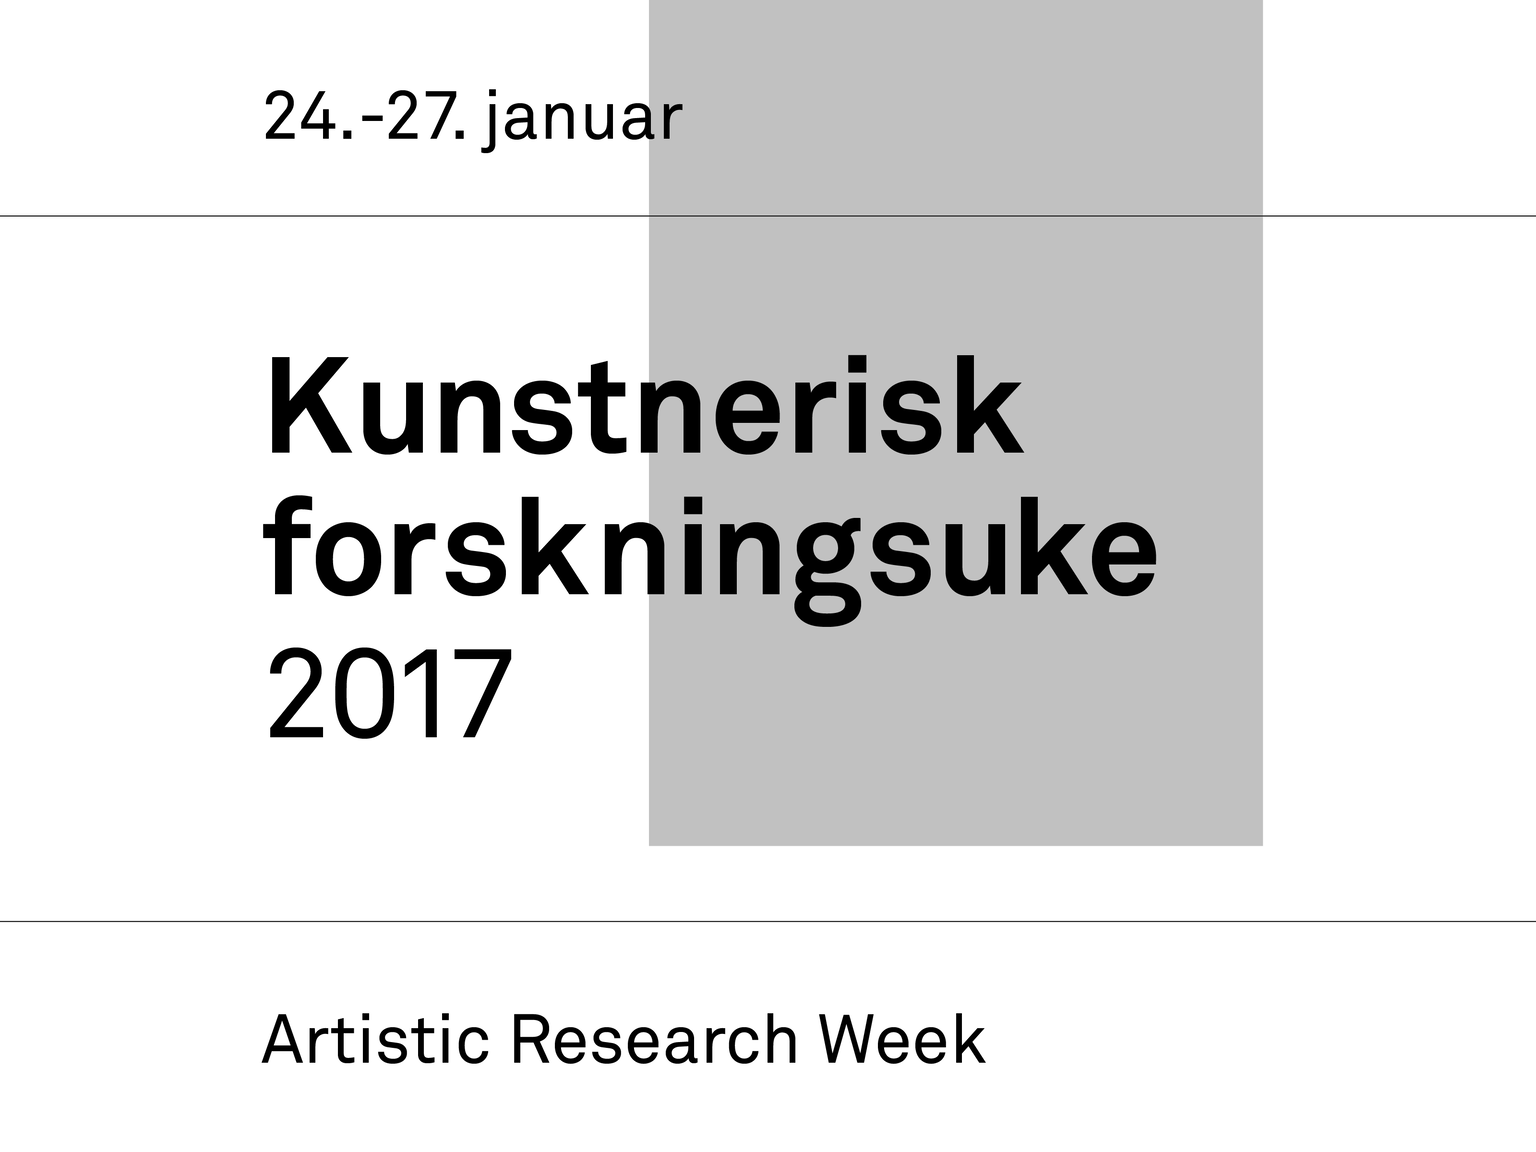 Artistic Research Week 2017